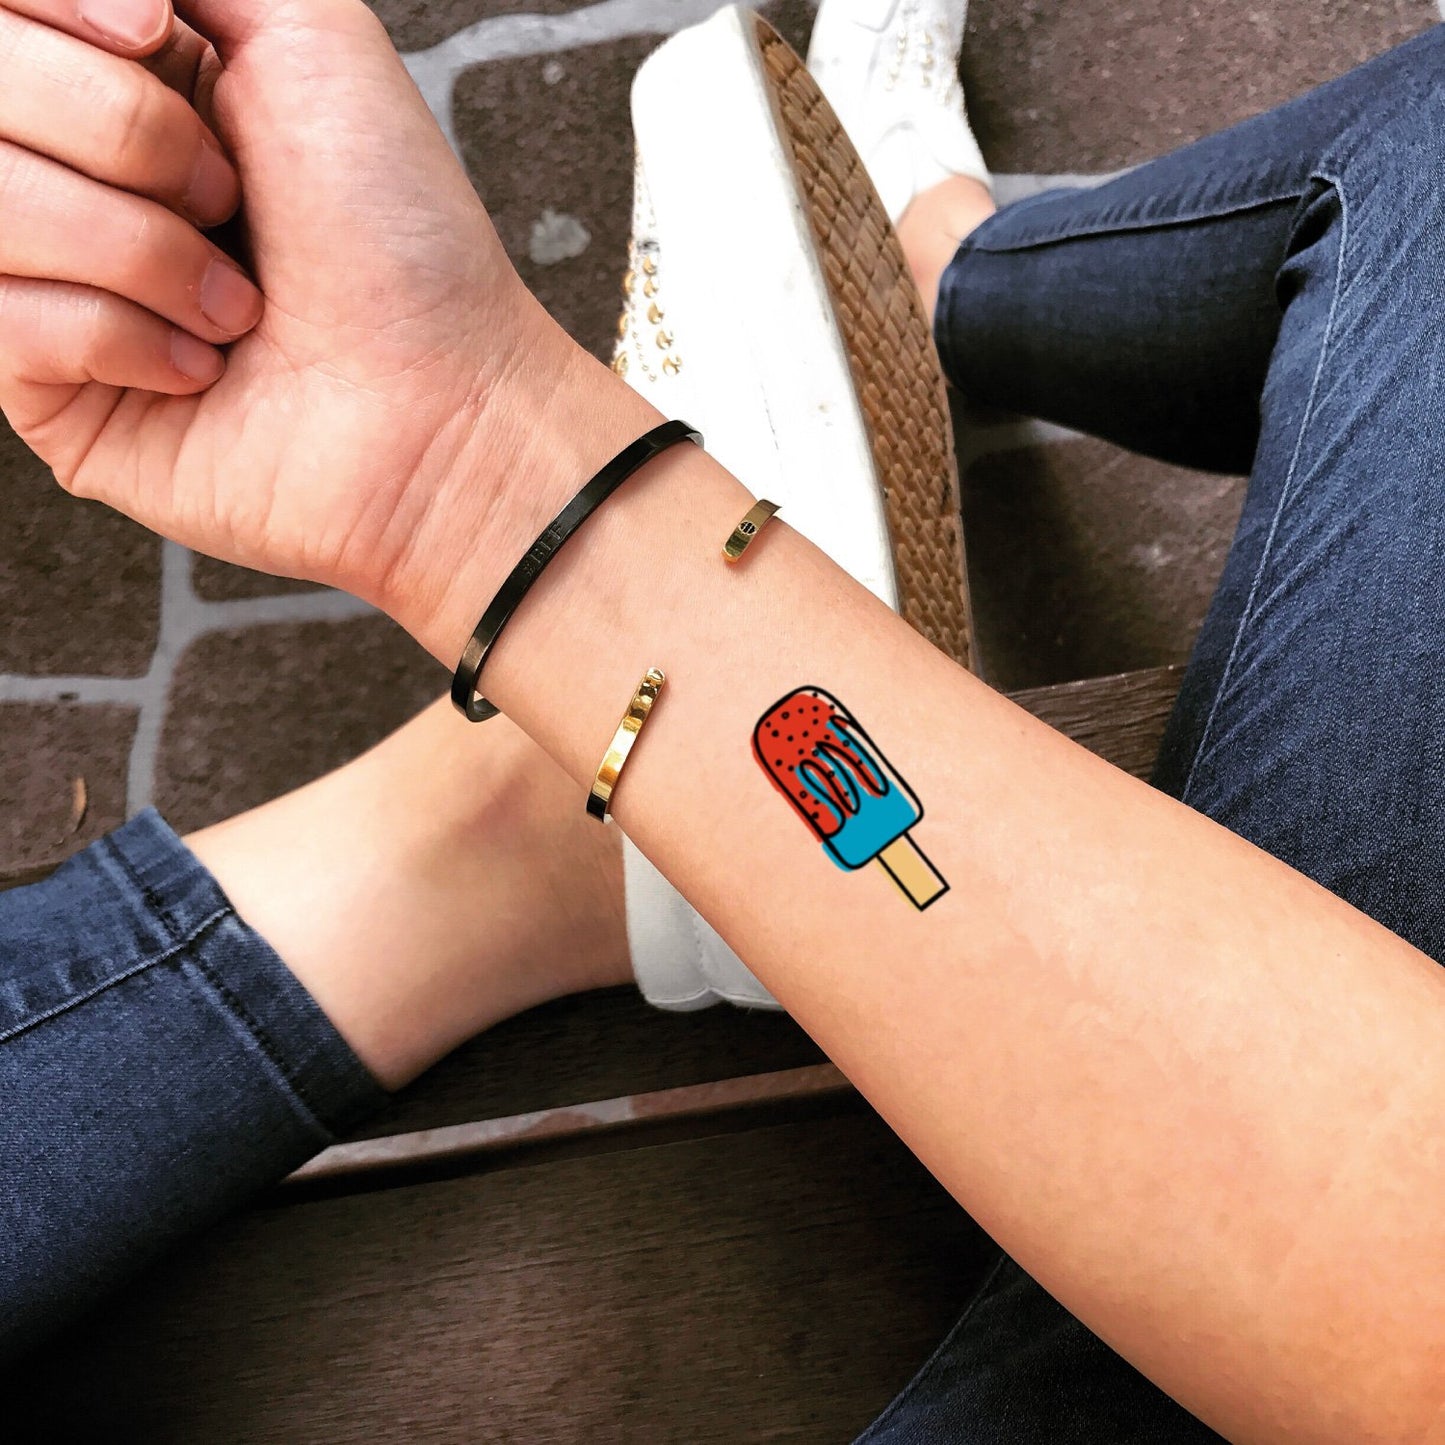 fake small popsicle food temporary tattoo sticker design idea on wrist